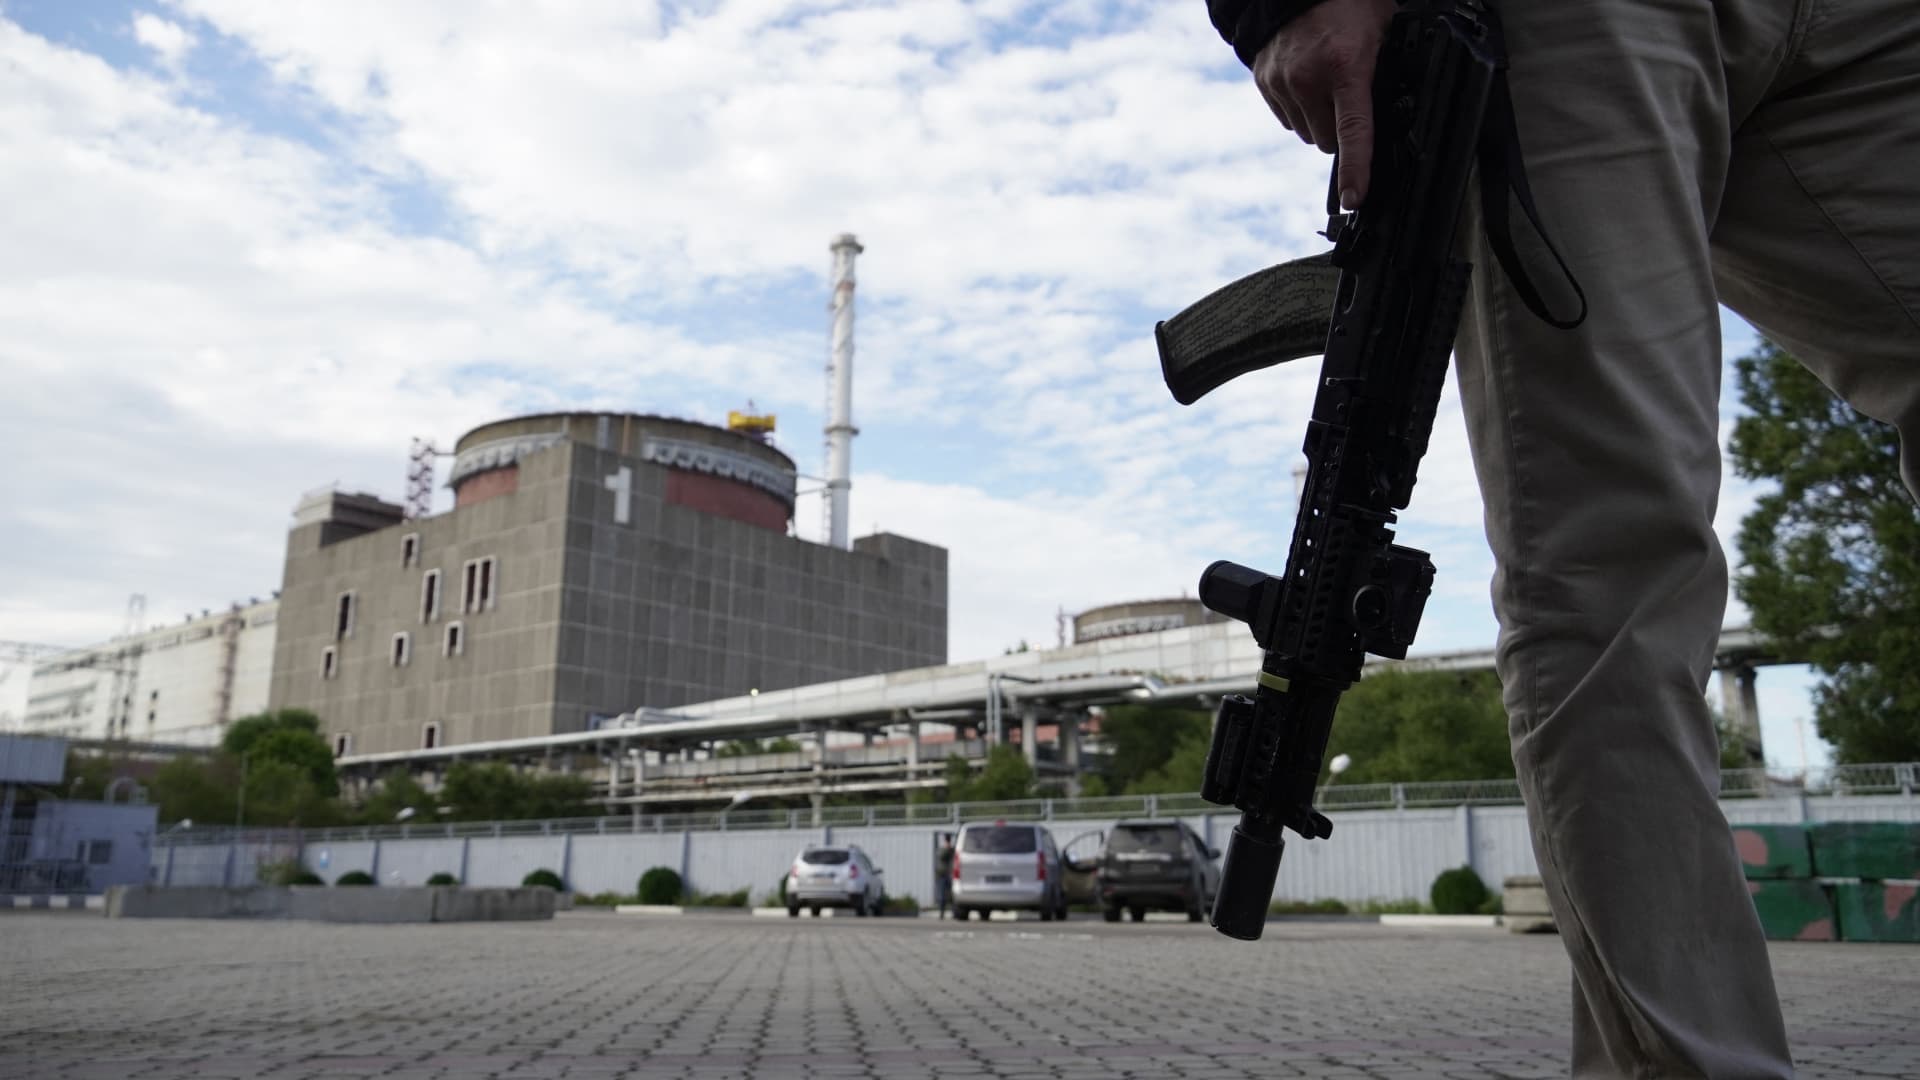 Ukraine nuclear power station shelled, UN nuclear watchdog says